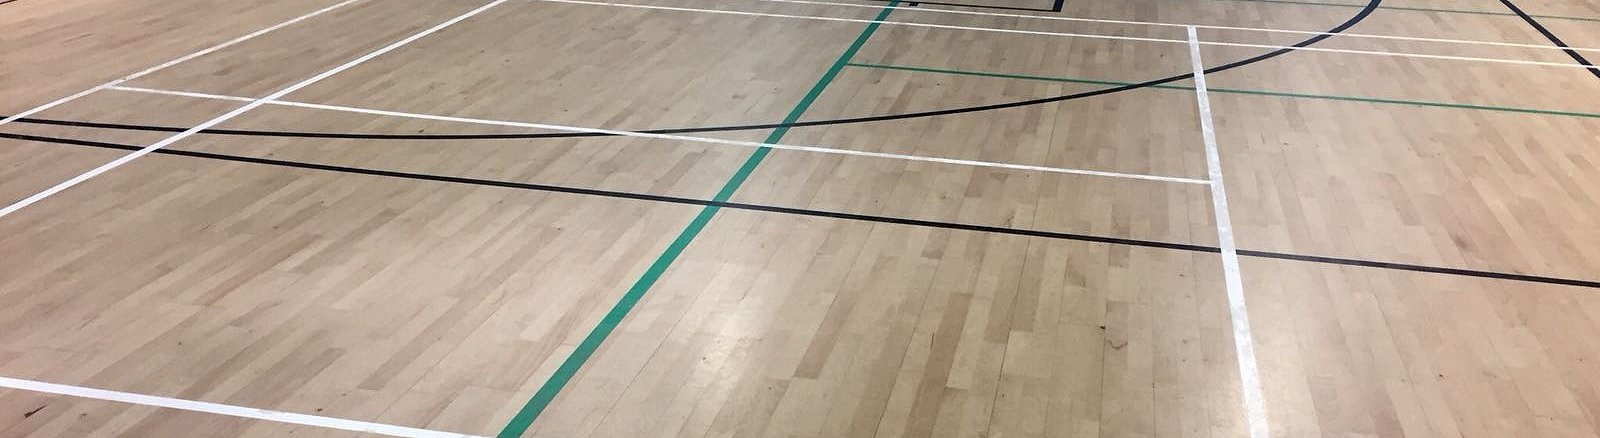 UK sports court hall marking contractors